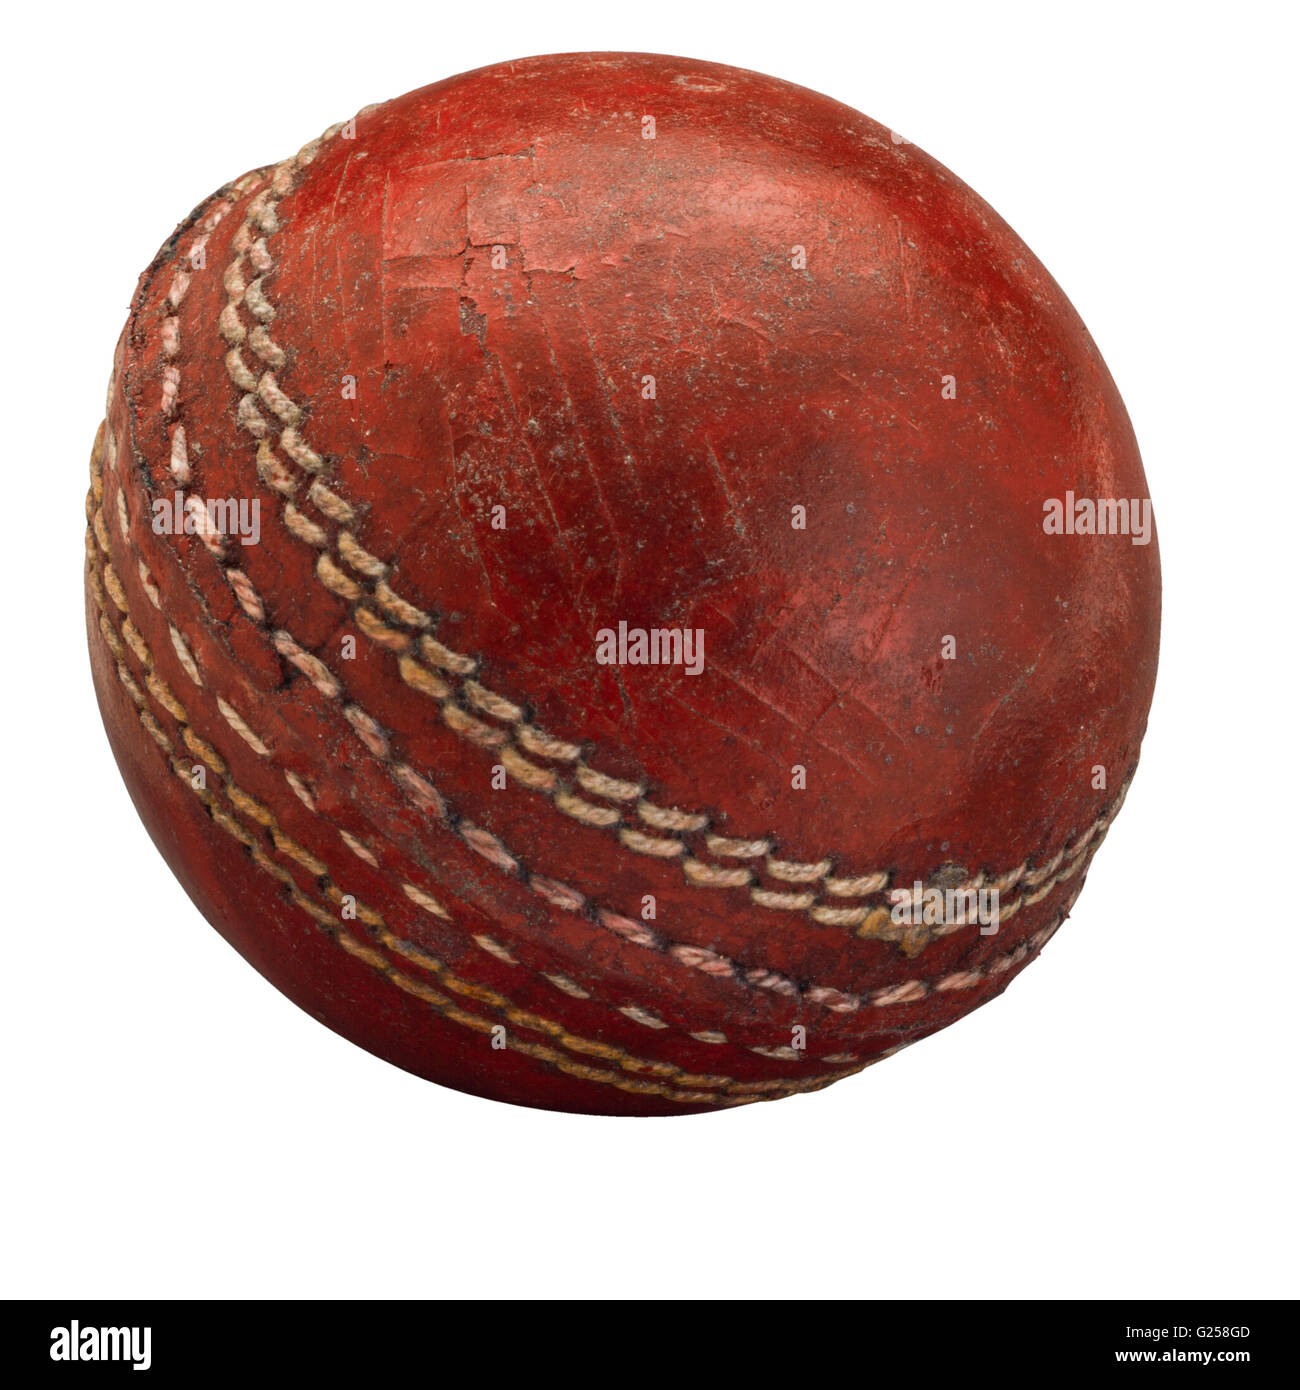 cricket ball isolated on background Stock Photo